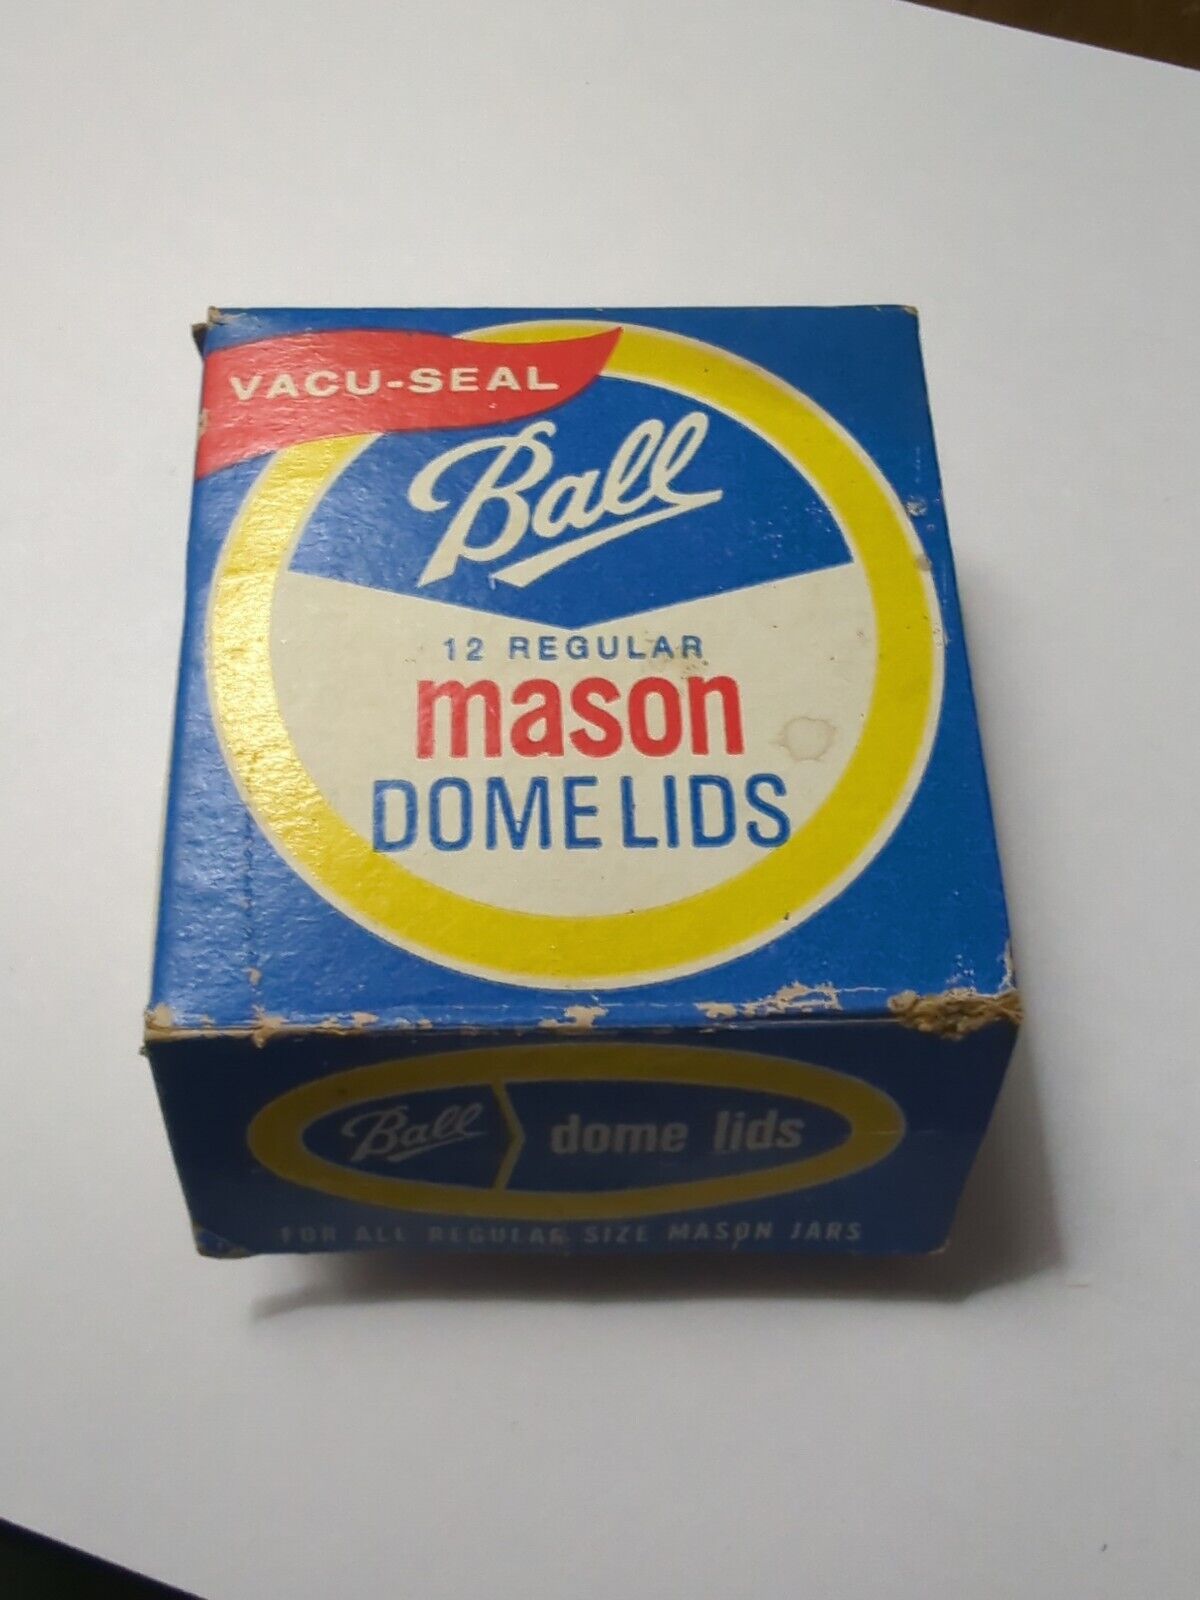 Ball 12 Regular Mason Dome Lids Dated 08/42